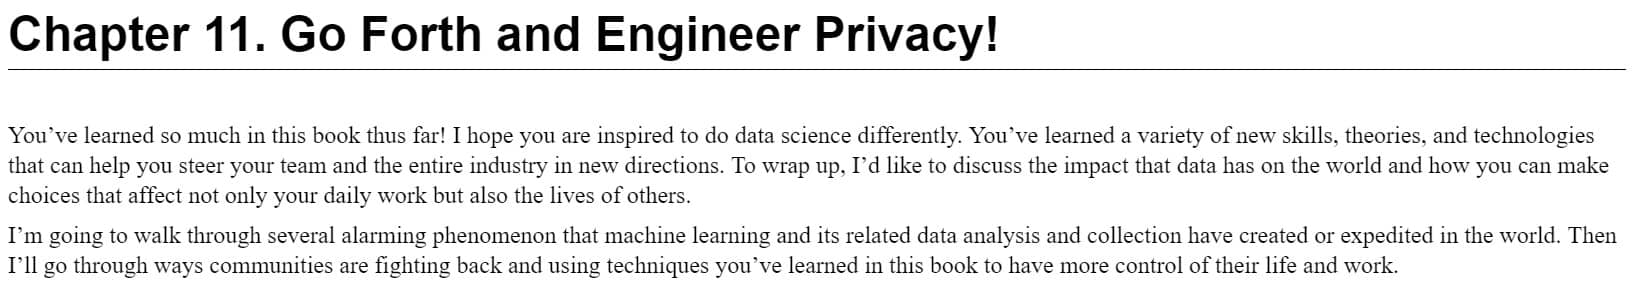 فصل 11 کتاب Practical Data Privacy